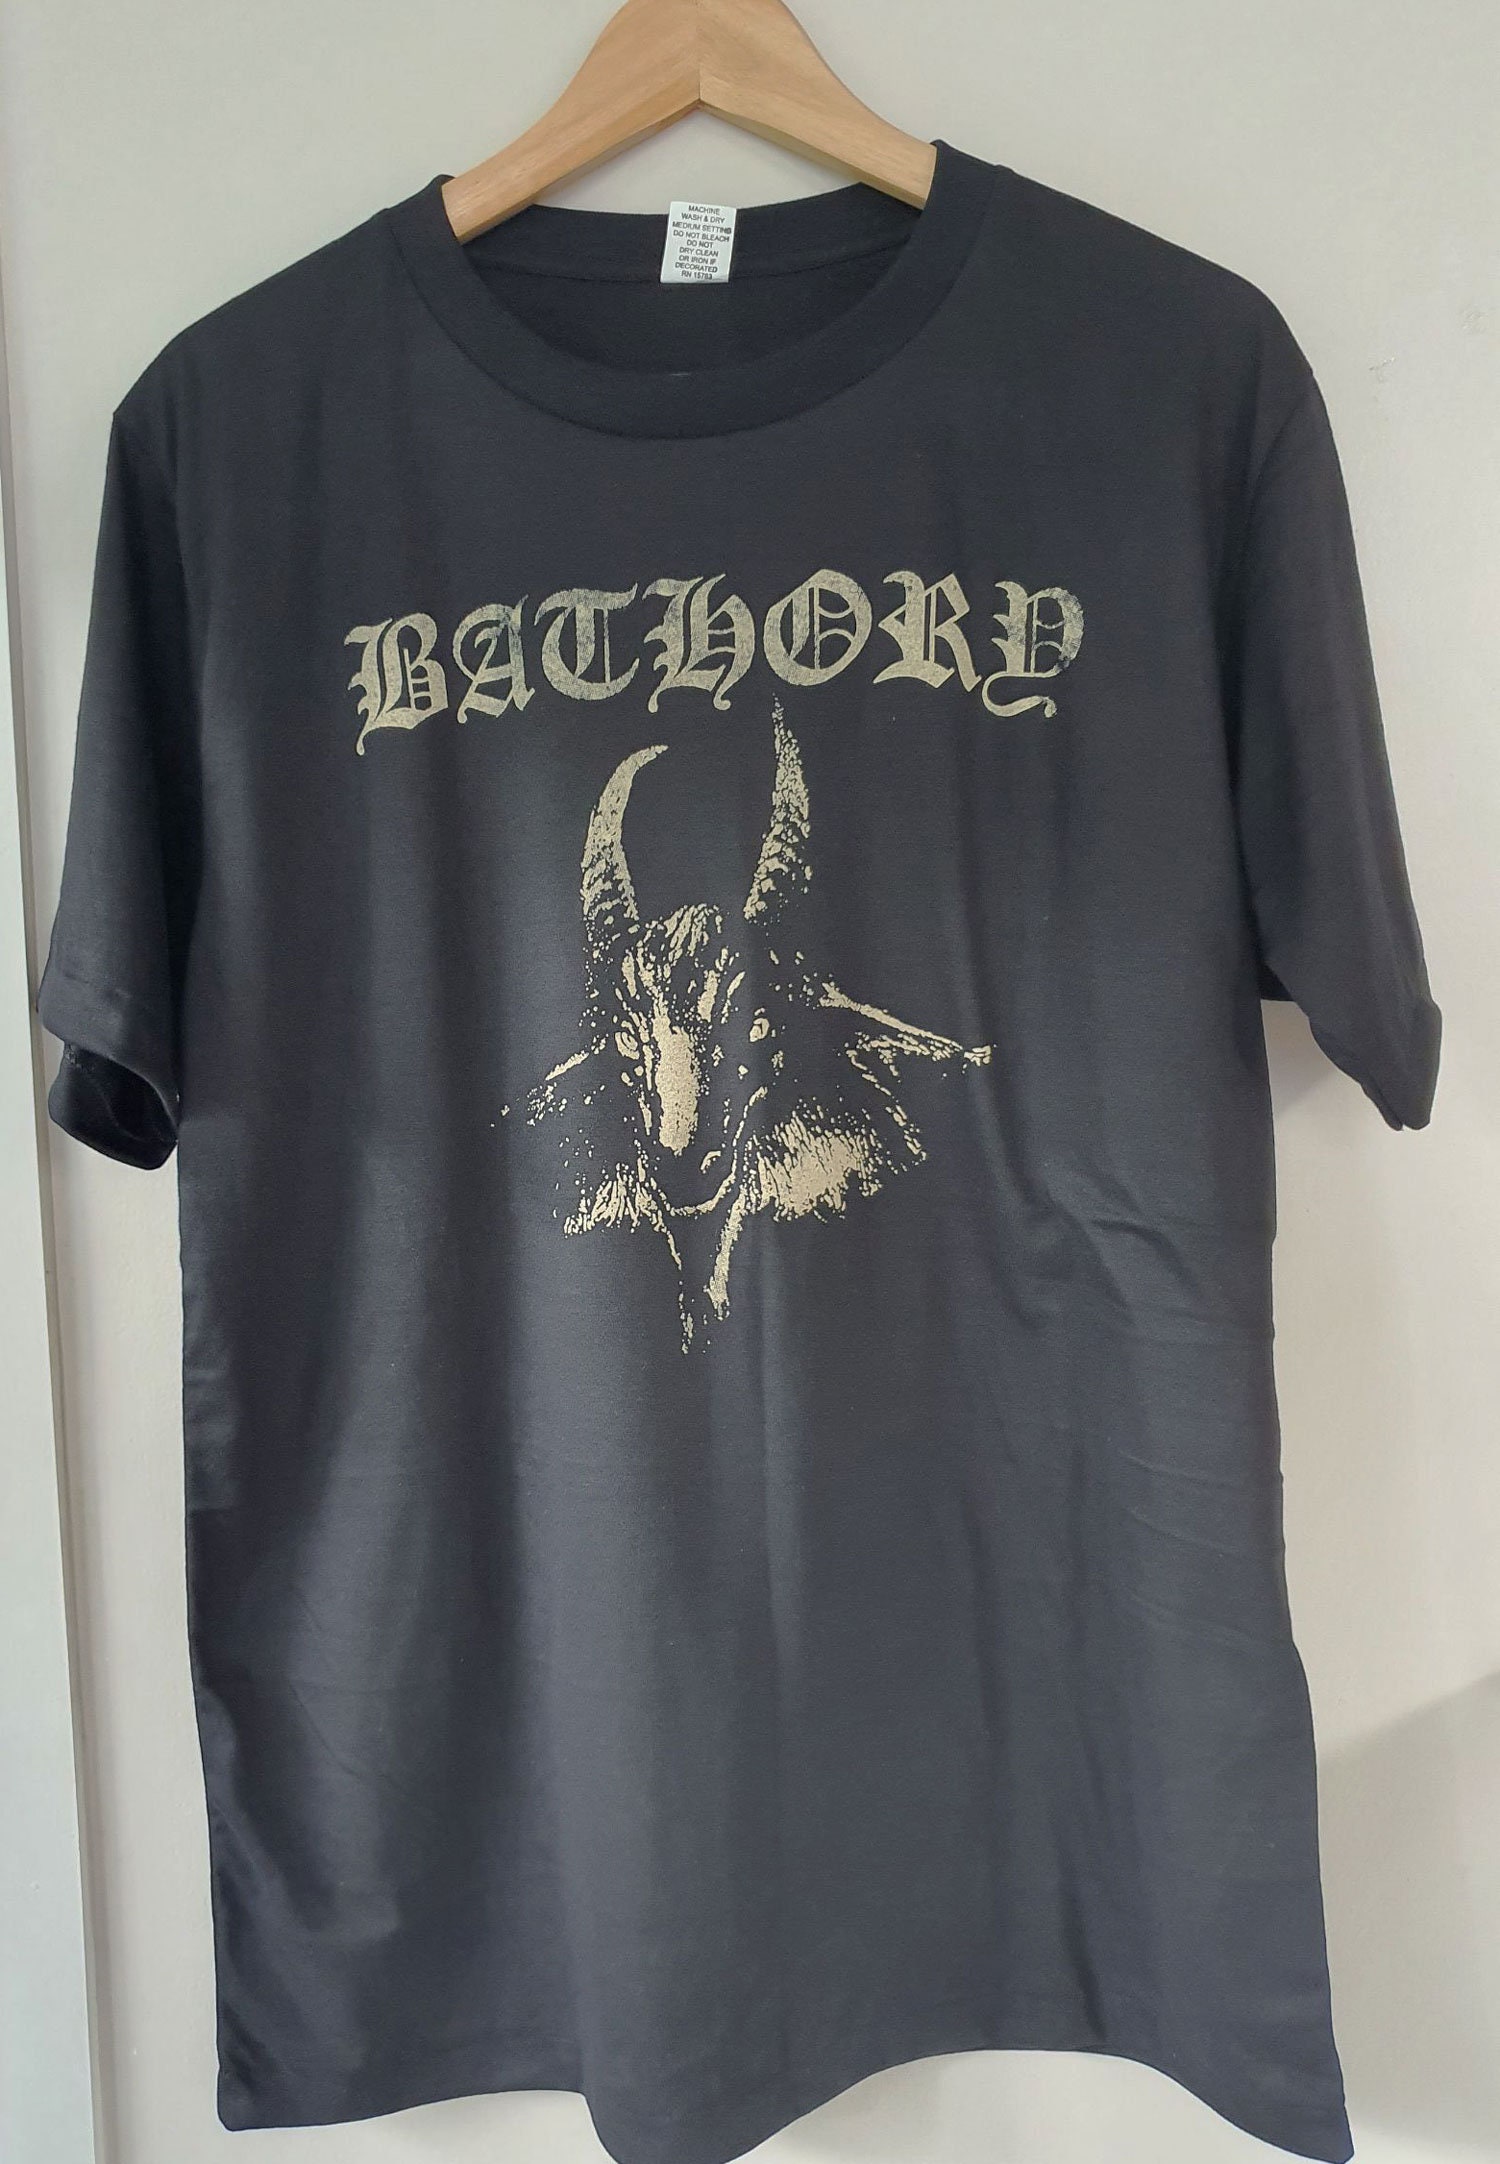 Bathory Batlord Vintage T shirt Size 42 Chest | Etsy